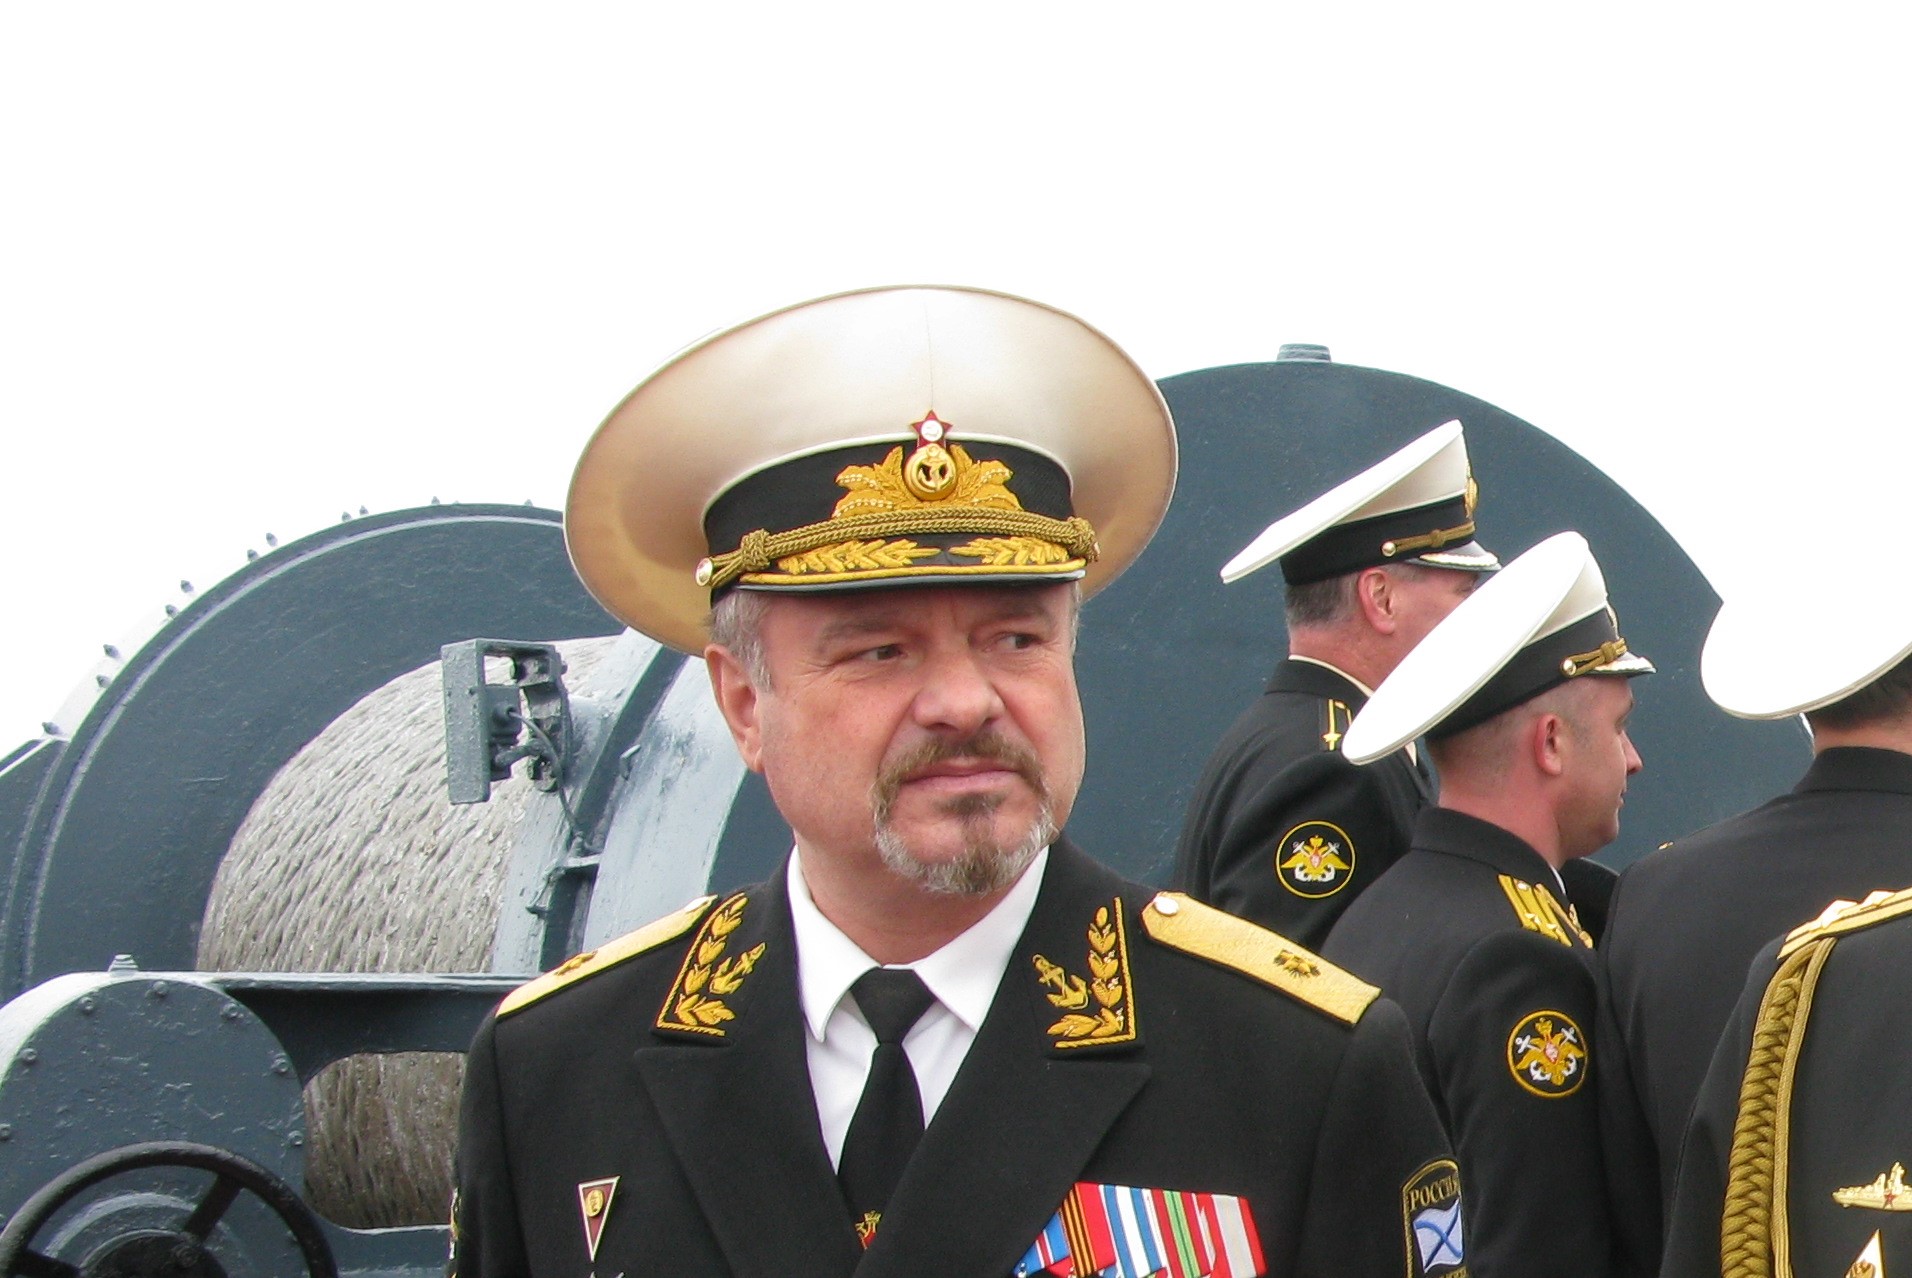 Федорович контр адмирал